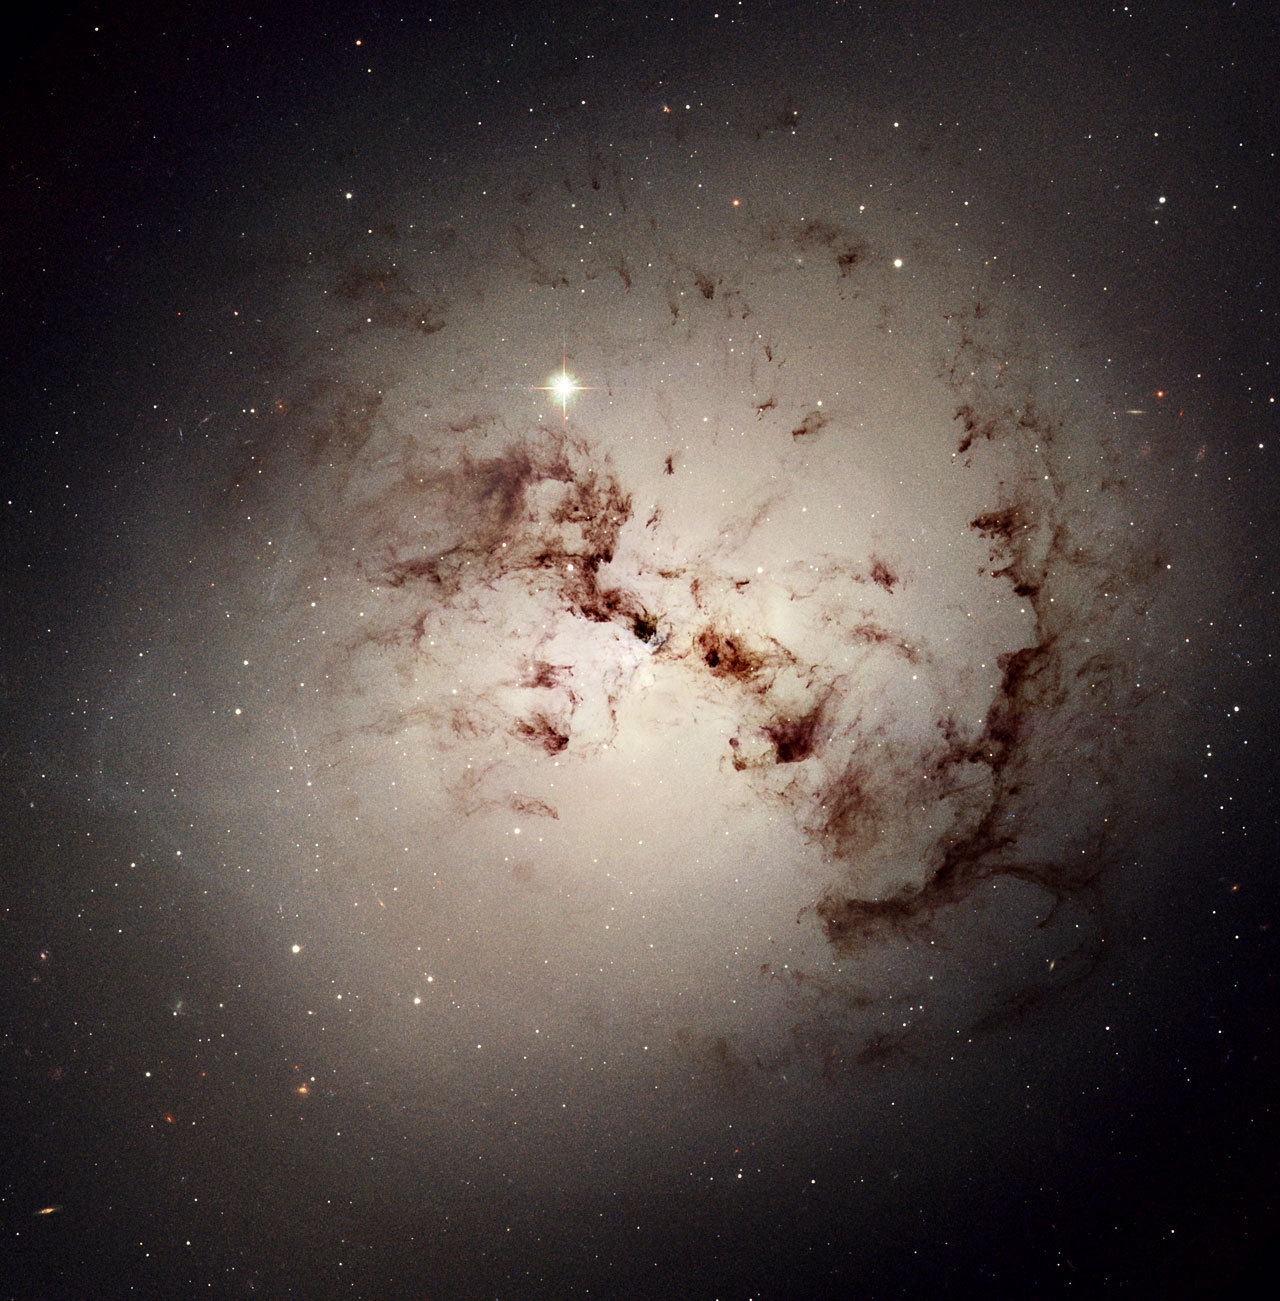 astronomyblog:    Hubble spies cosmic dust bunnies   Like dust bunnies that lurk